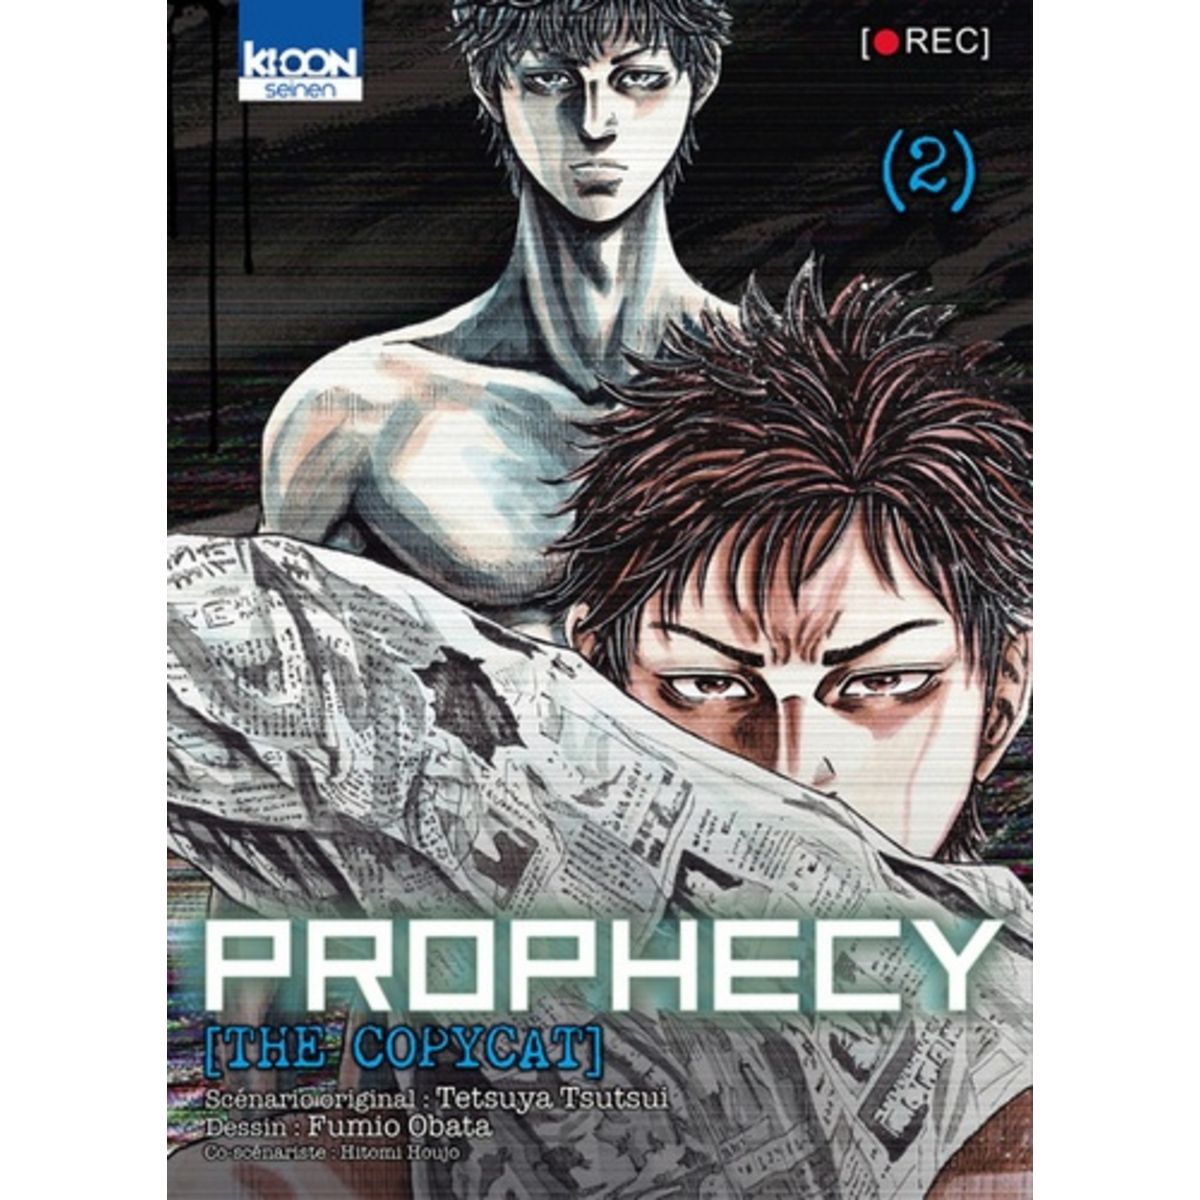  PROPHECY - THE COPYCAT TOME 2, Tsutsui Tetsuya